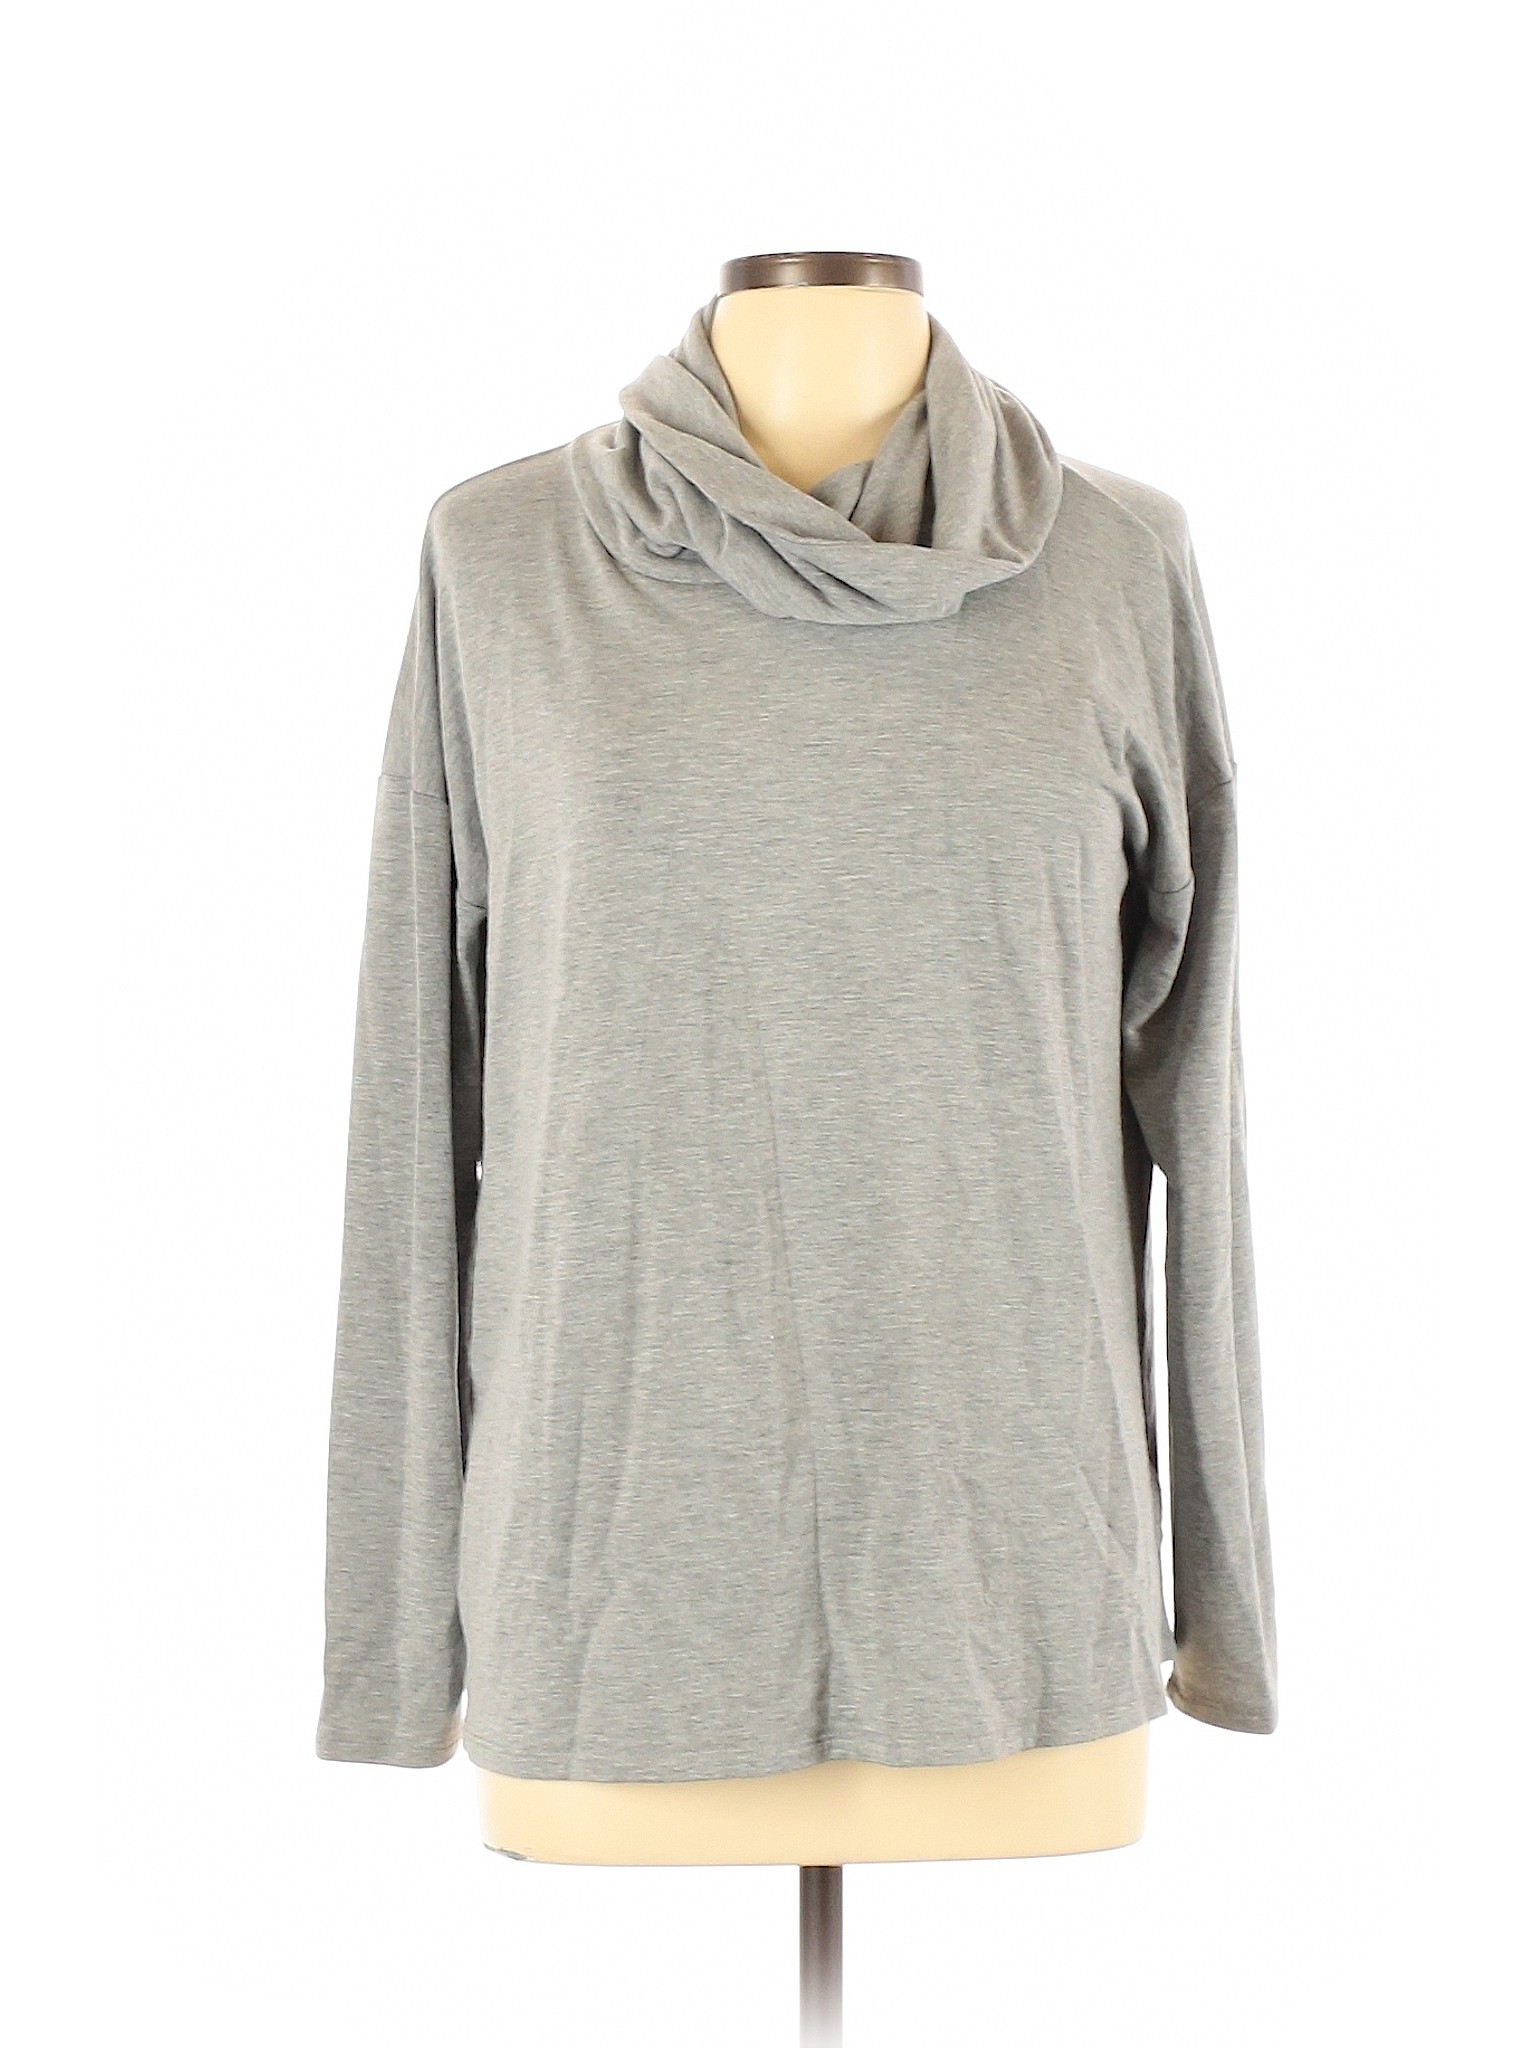 Cupio Women Gray Long Sleeve T-Shirt L | eBay